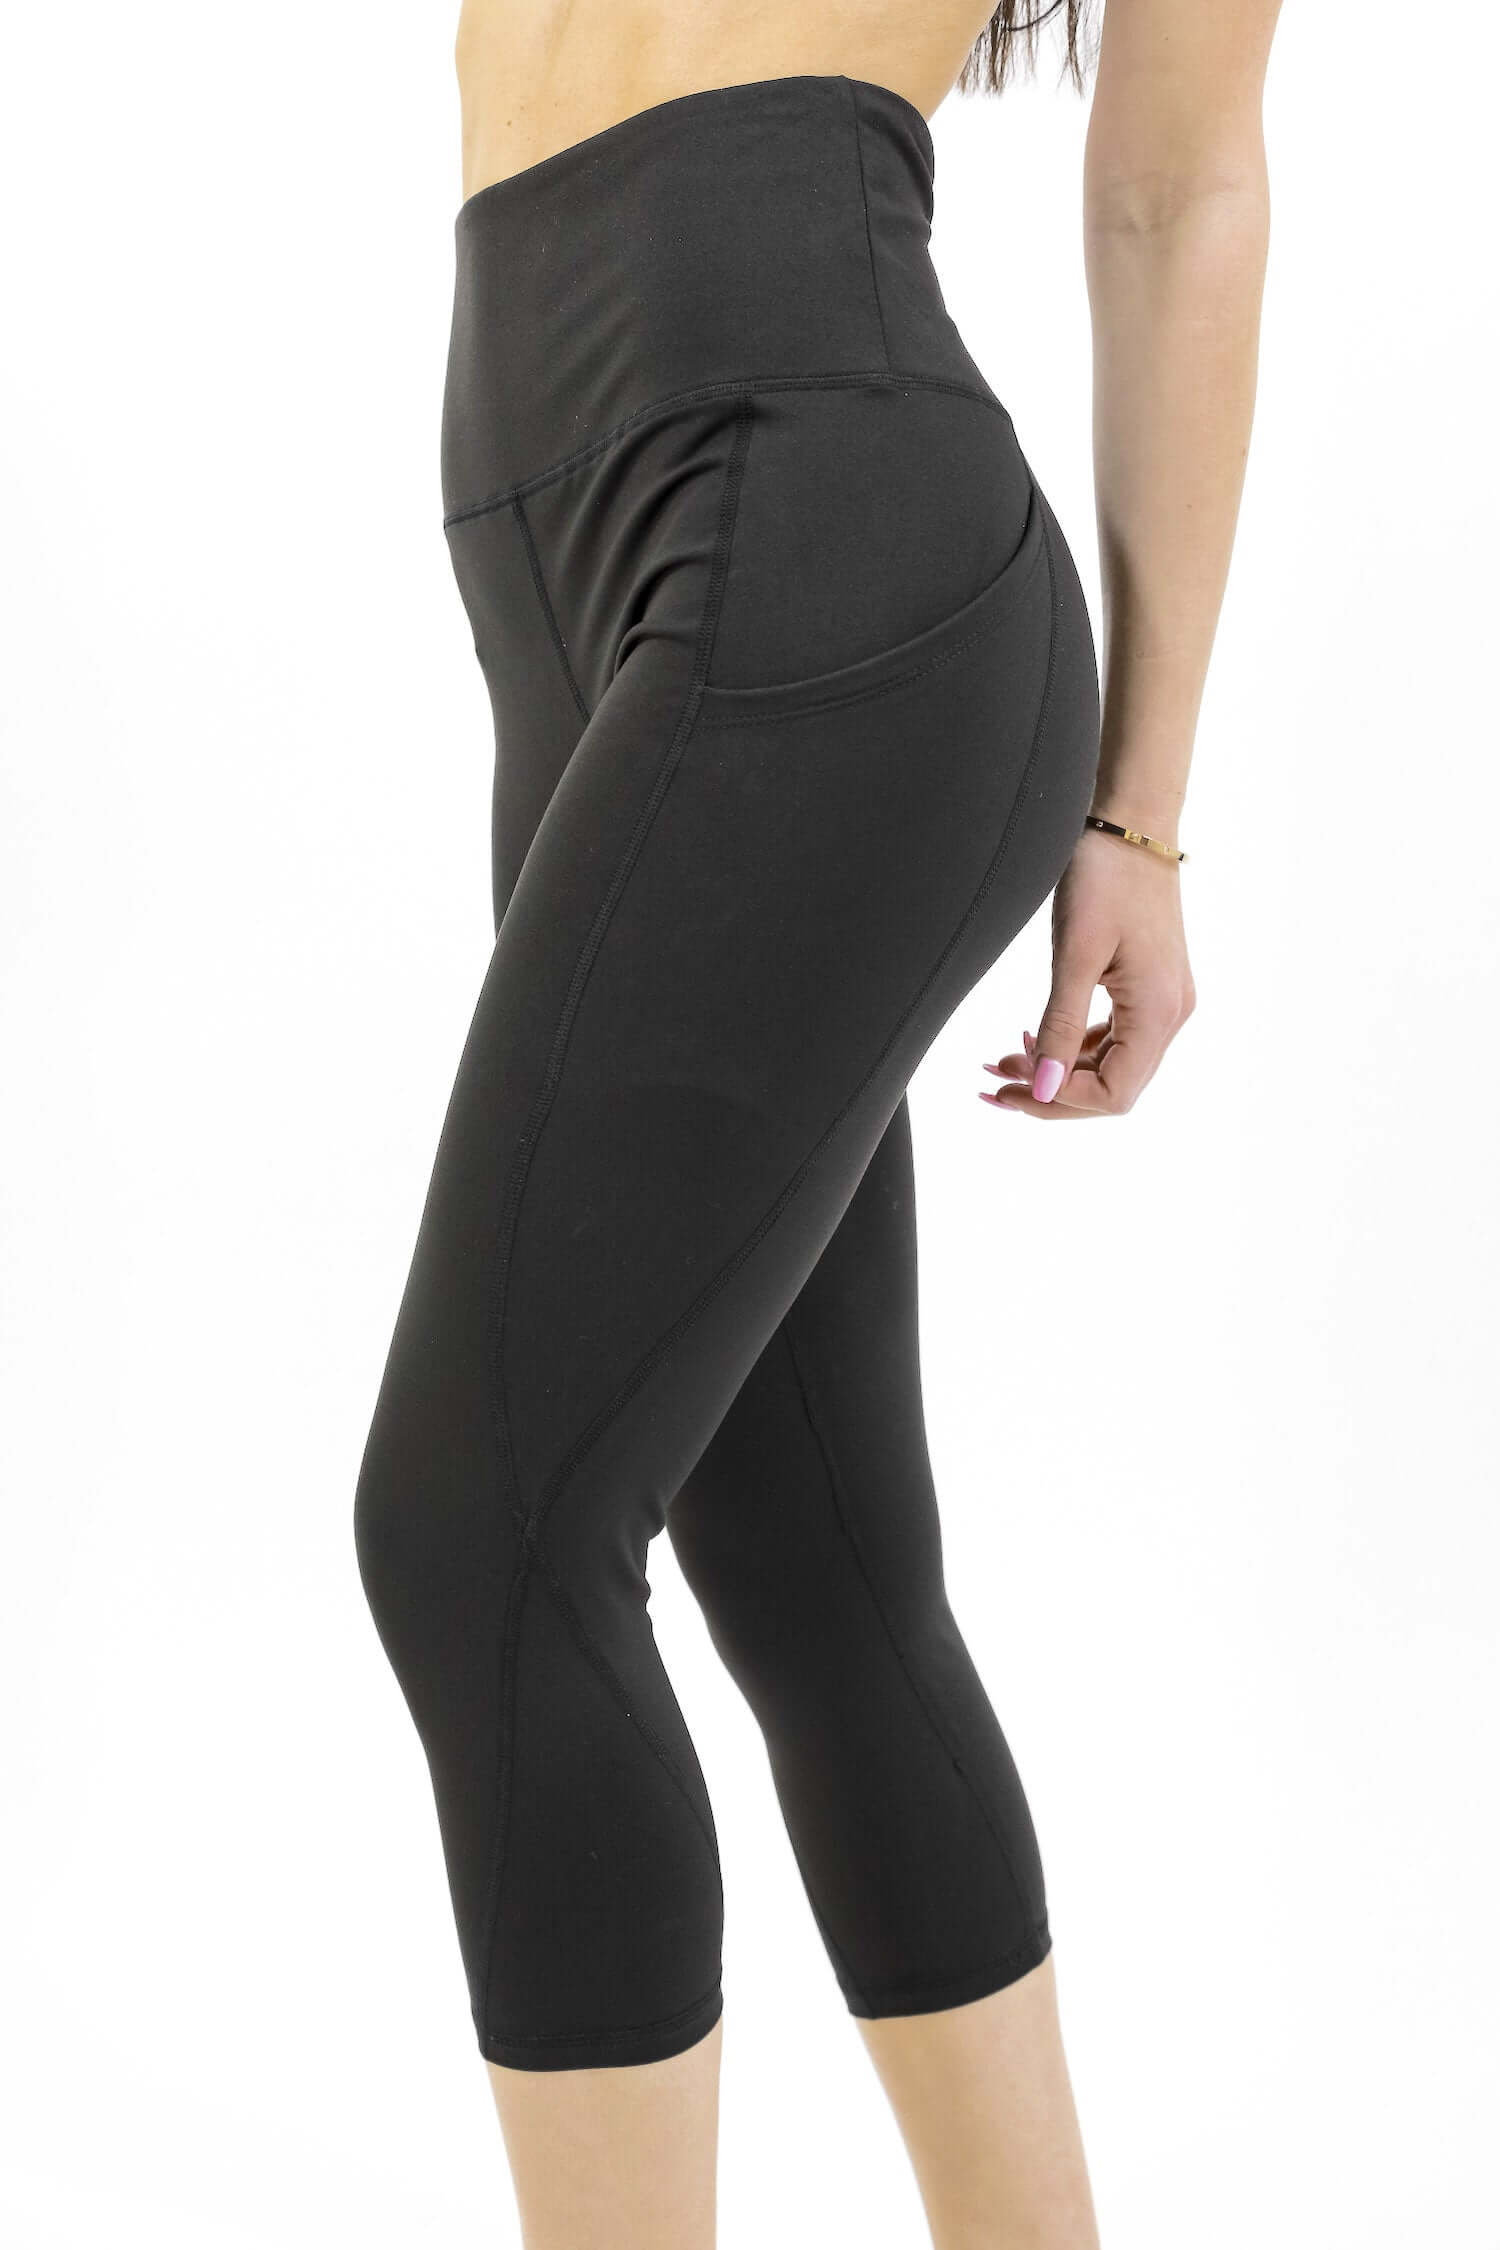 Black capri leggings New Balance XS Capri athletic - Depop